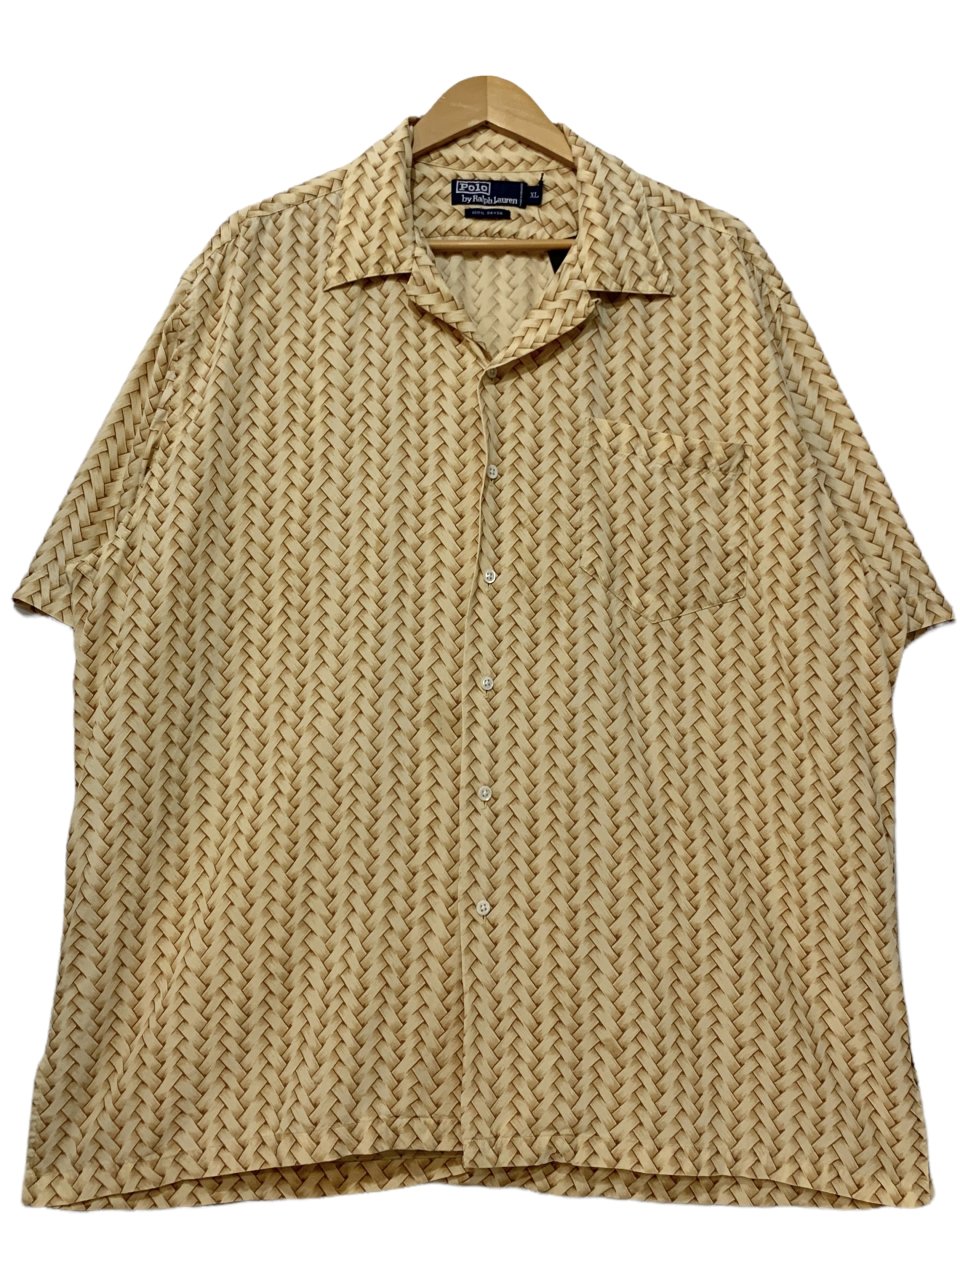 Polo Ralph Lauren Rayon Aloha Shirt ベージュ XL ポロラルフローレン